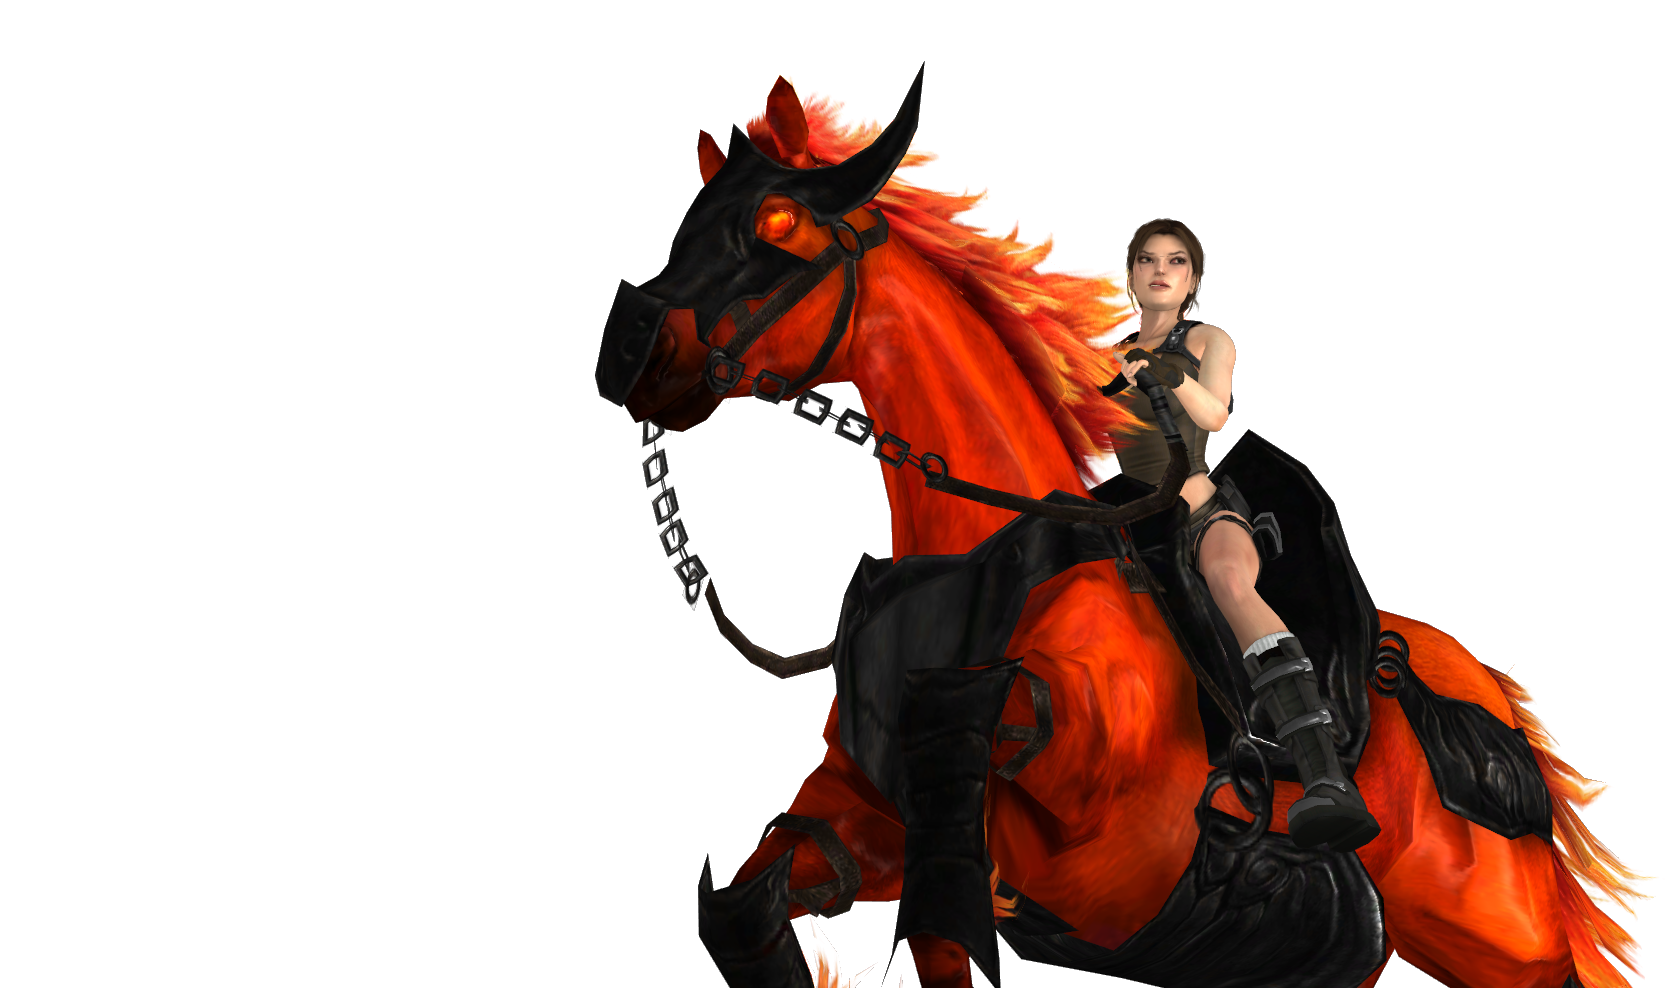 Lara and her horse